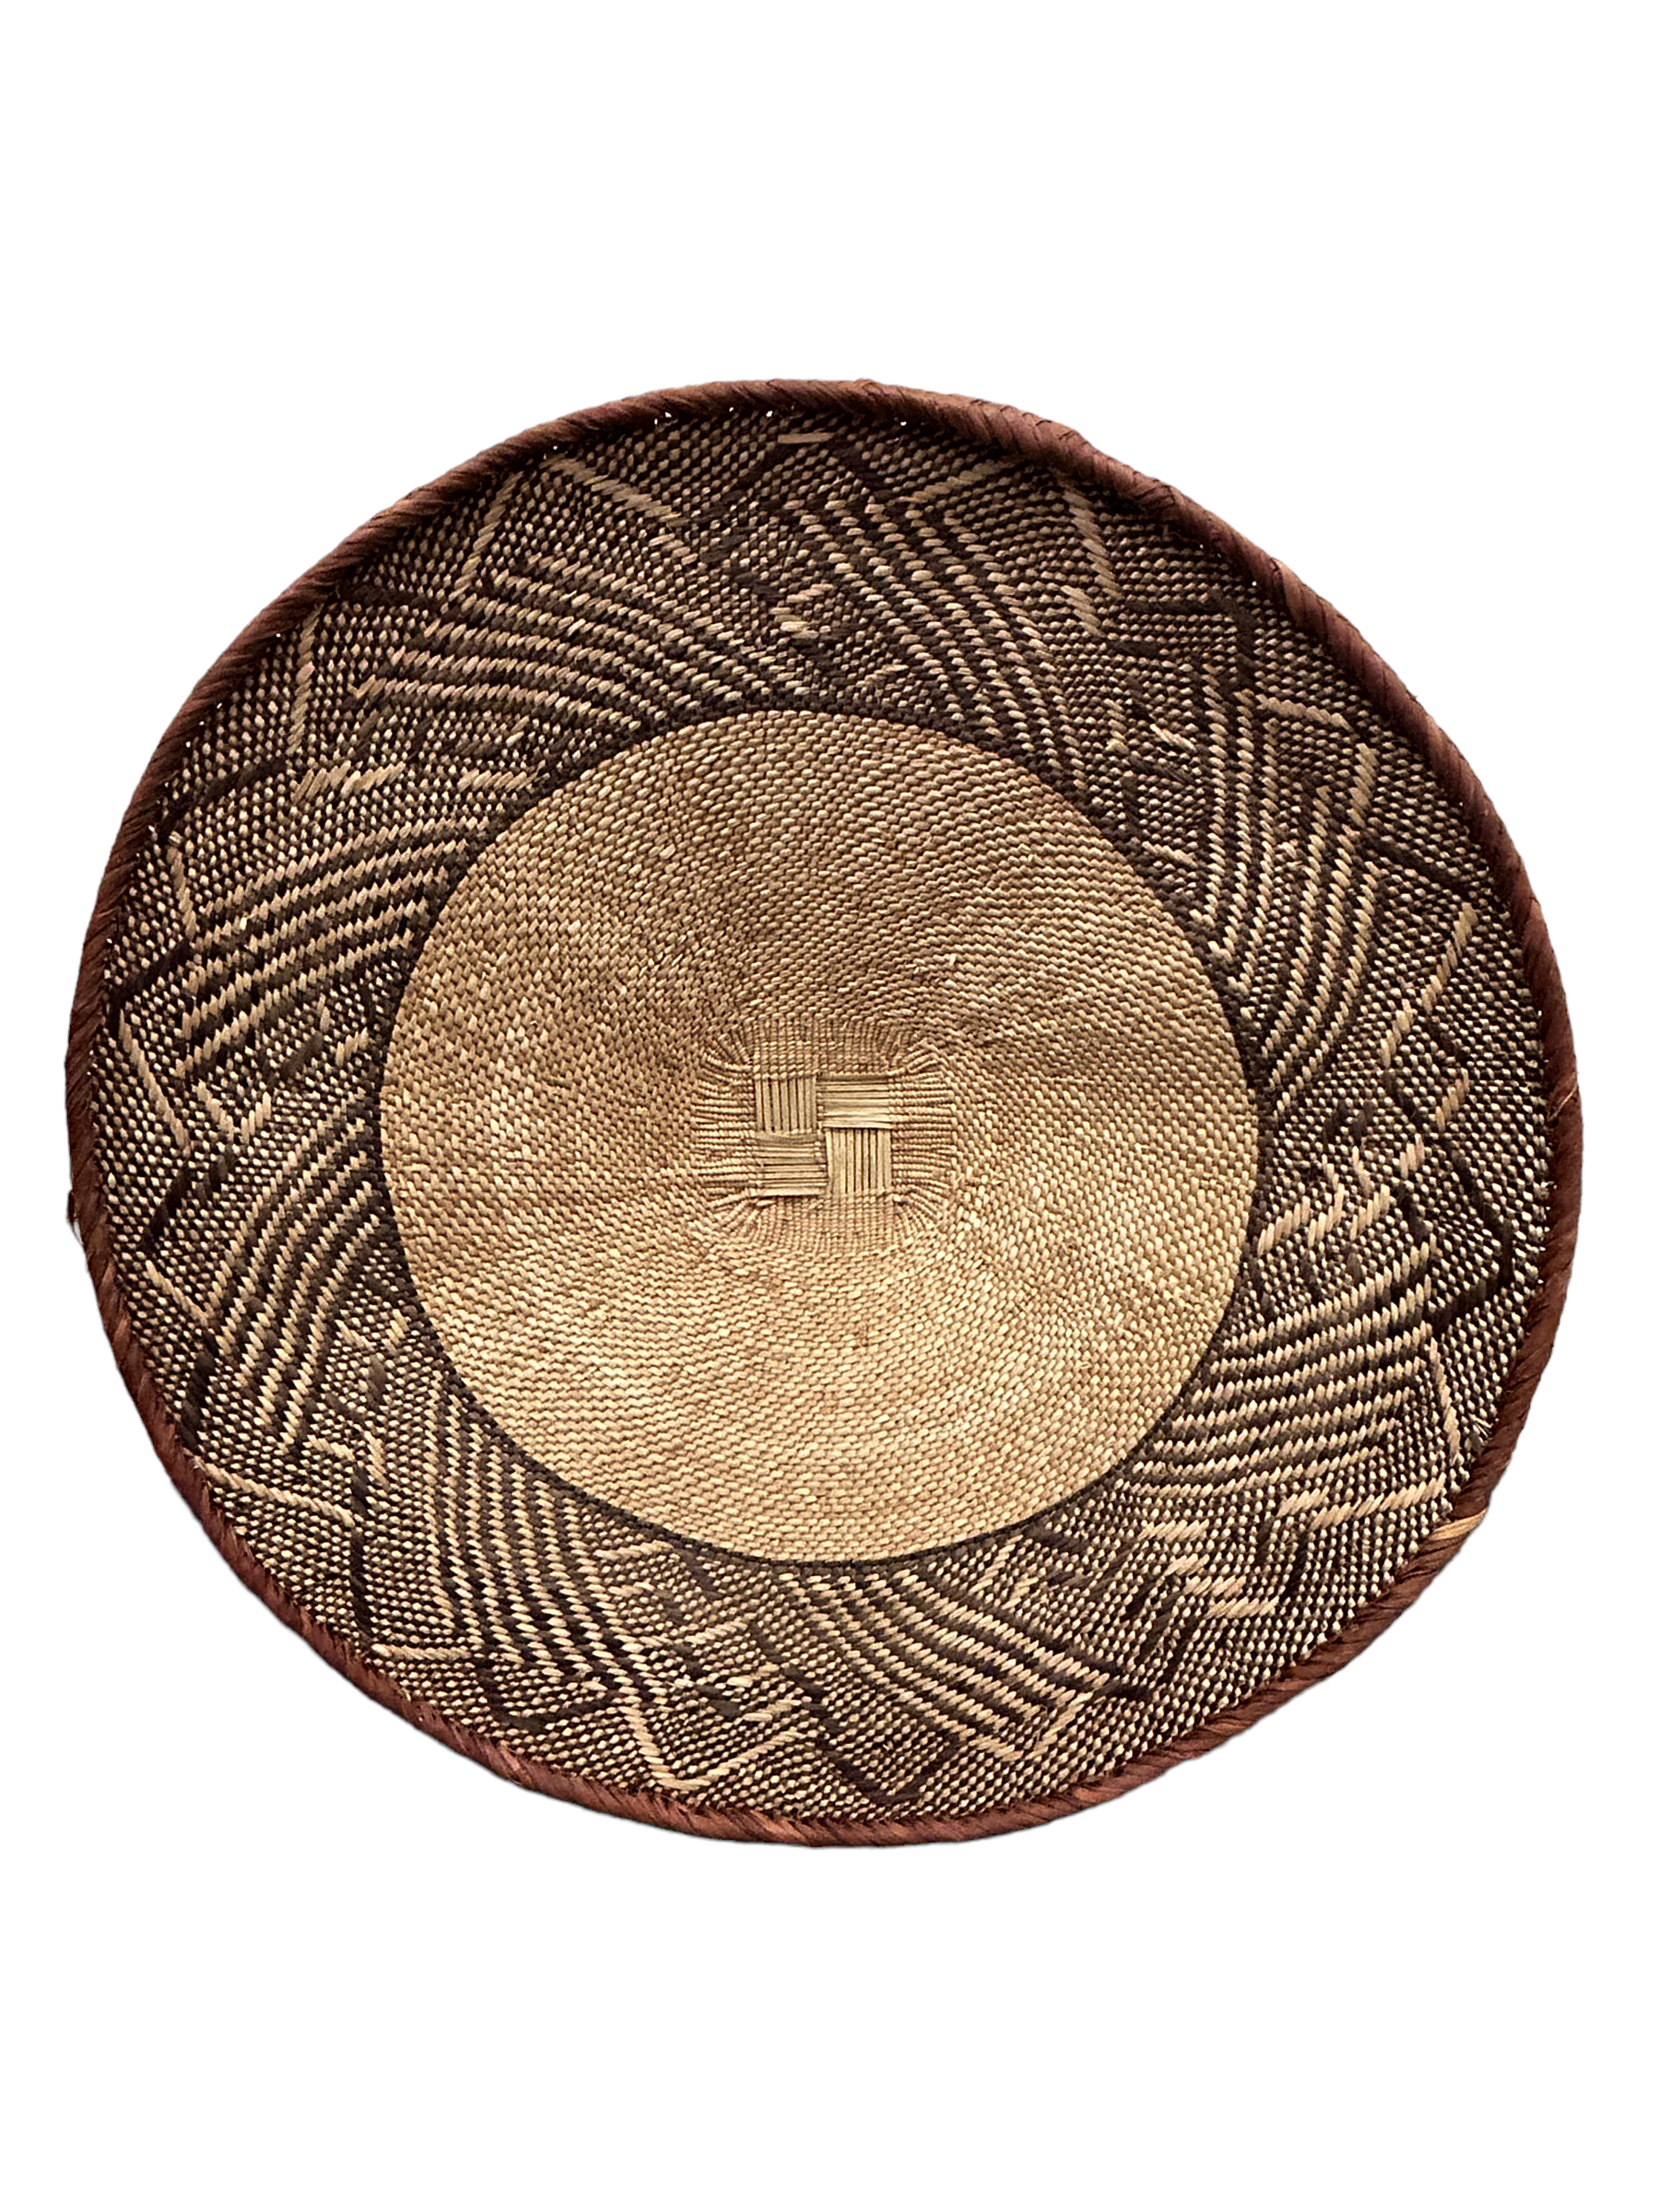 Tonga Basket Natural (55-05)